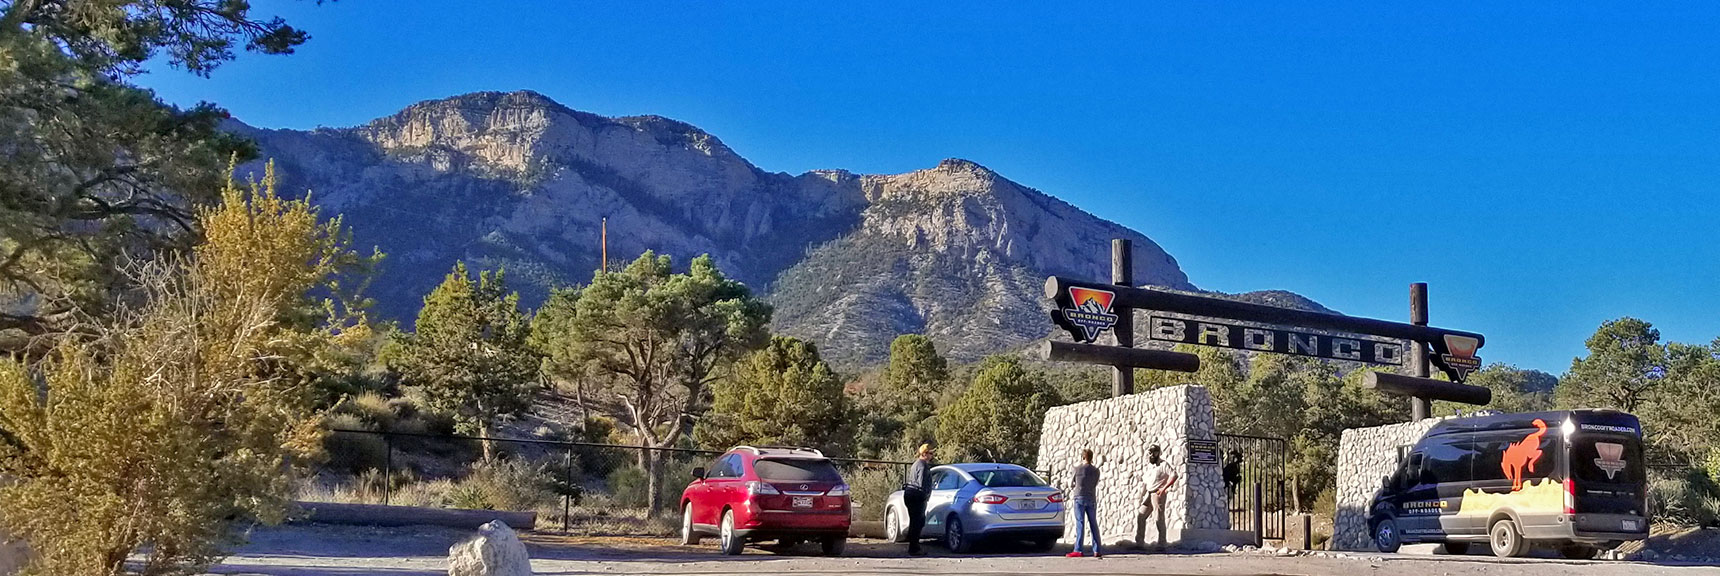 Bronco Off-Roadeo Off Roading Adventures | Potosi Mountain Northwestern Approach, Spring Mountains, Nevada